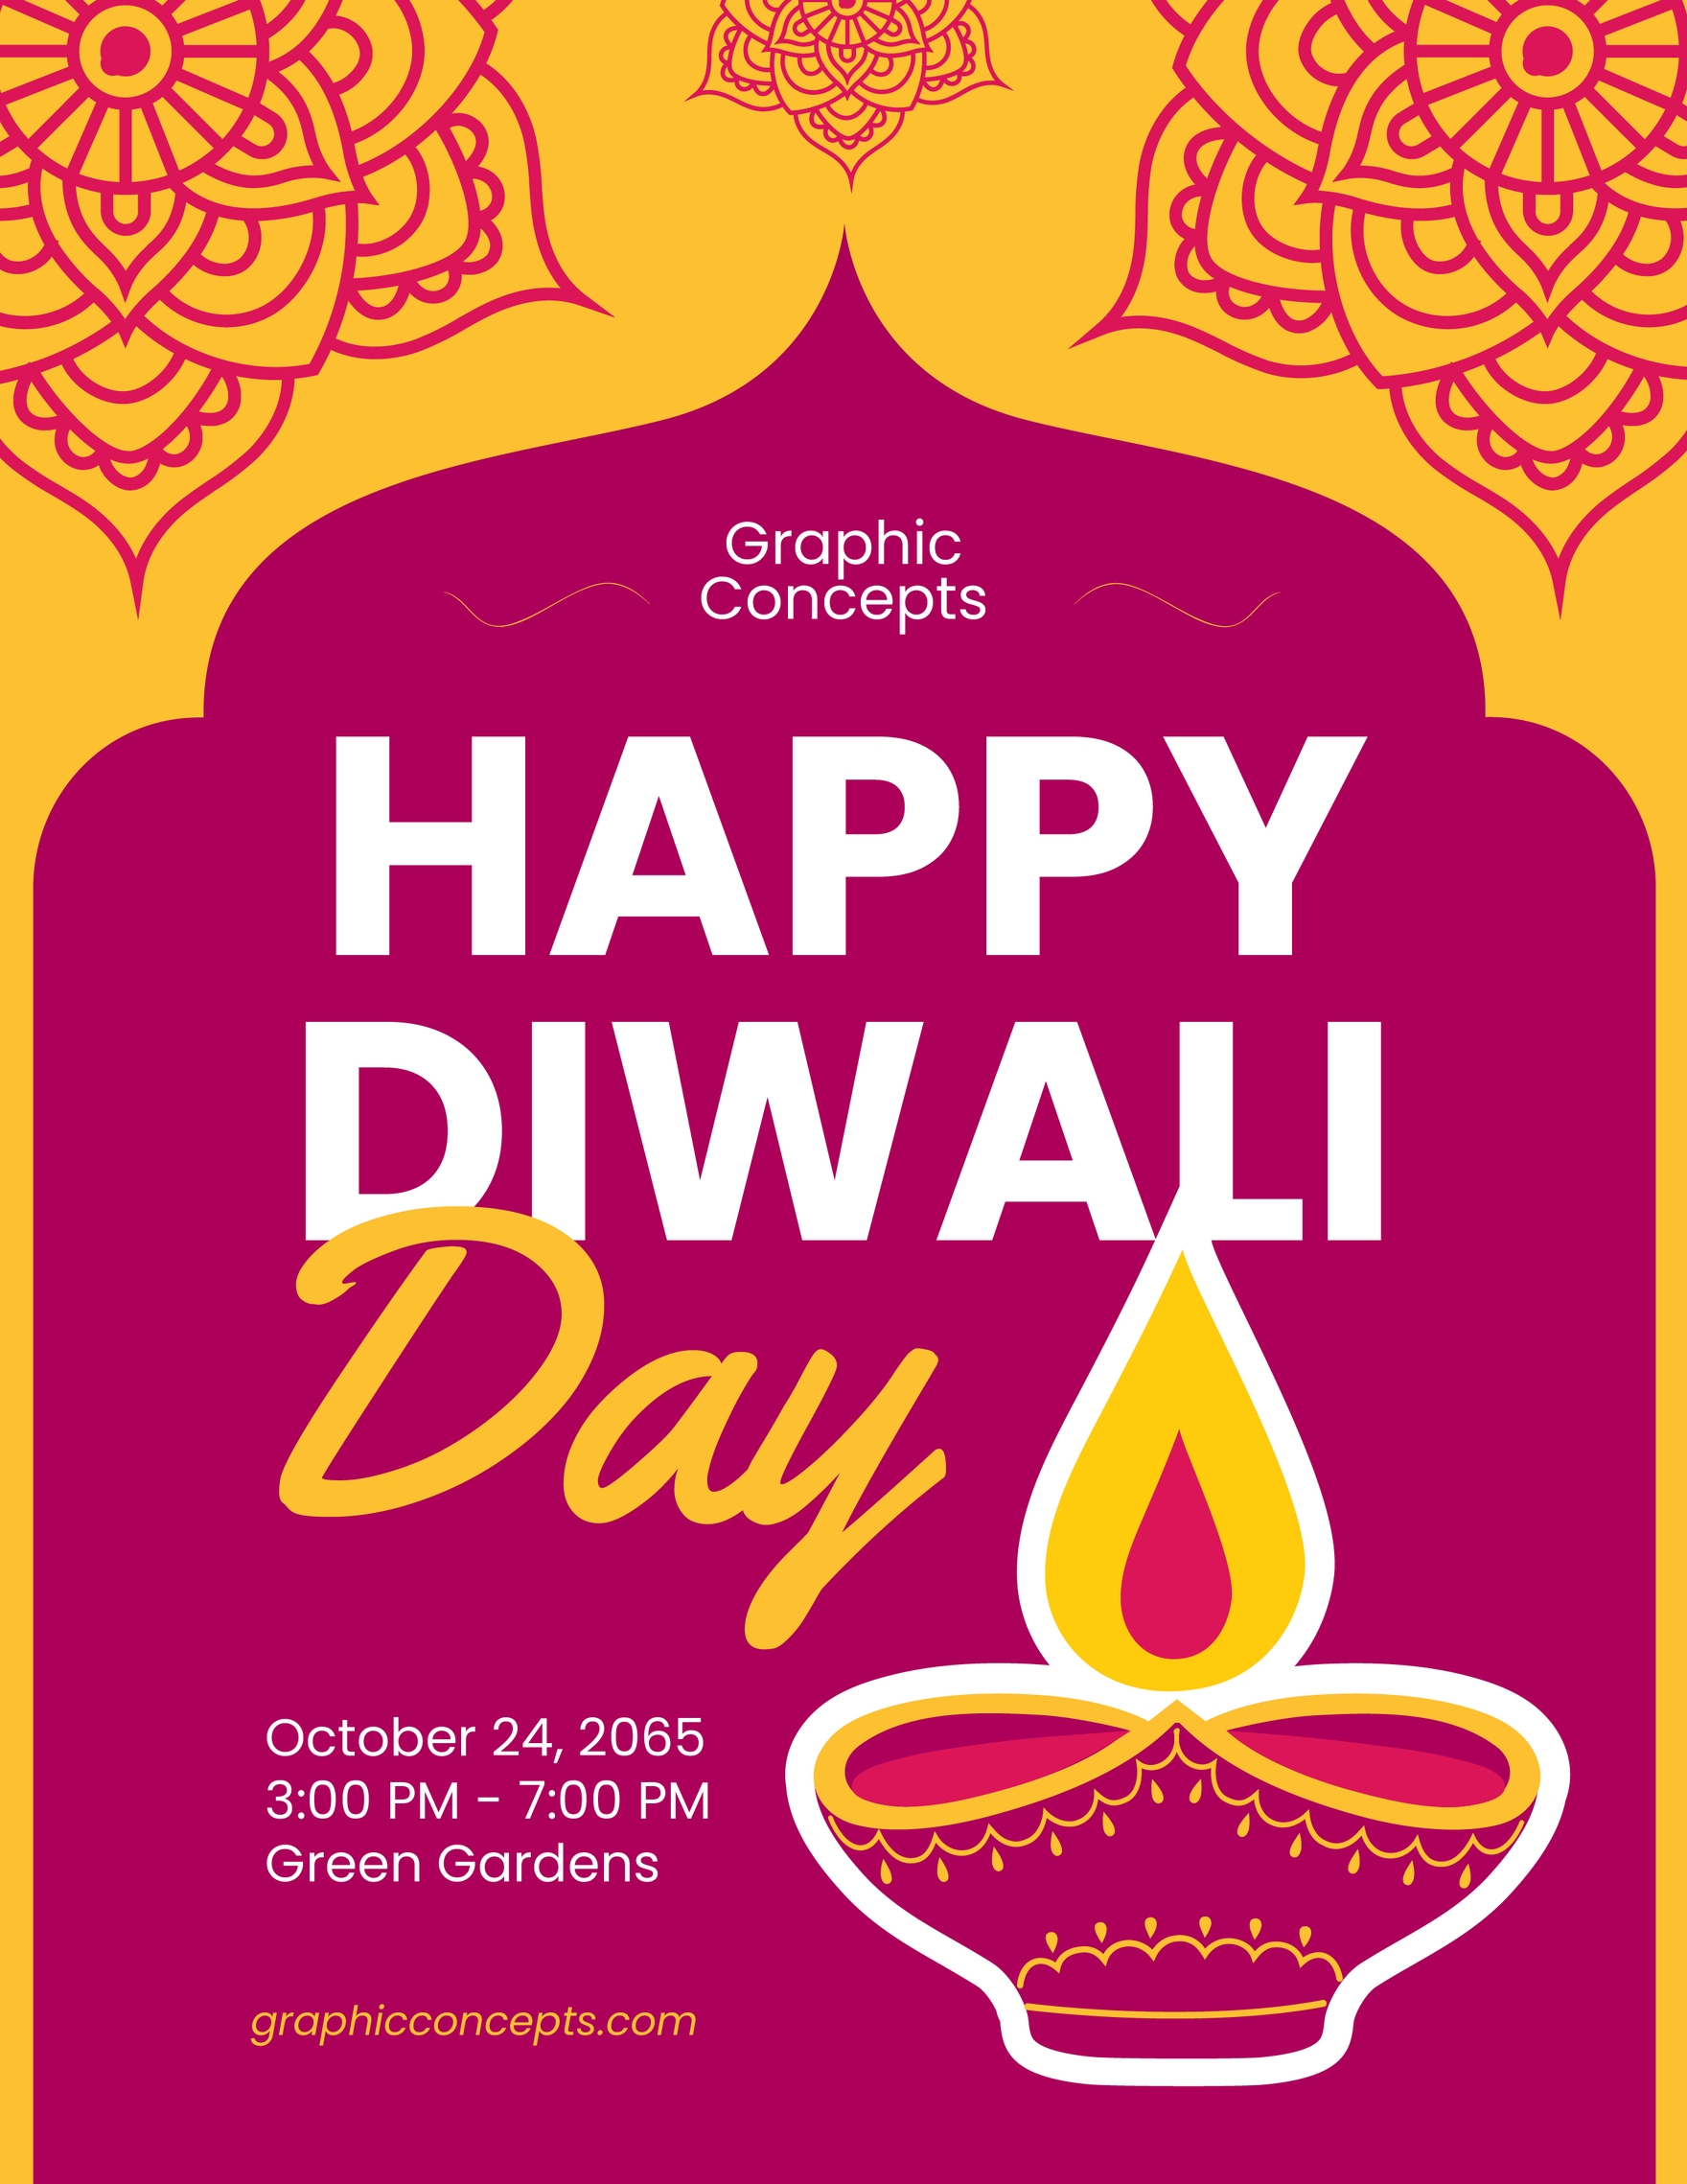 Free Diwali Day Flyer in Word, Google Docs, Illustrator, PSD, Apple Pages, Publisher, EPS, SVG, JPG, PNG